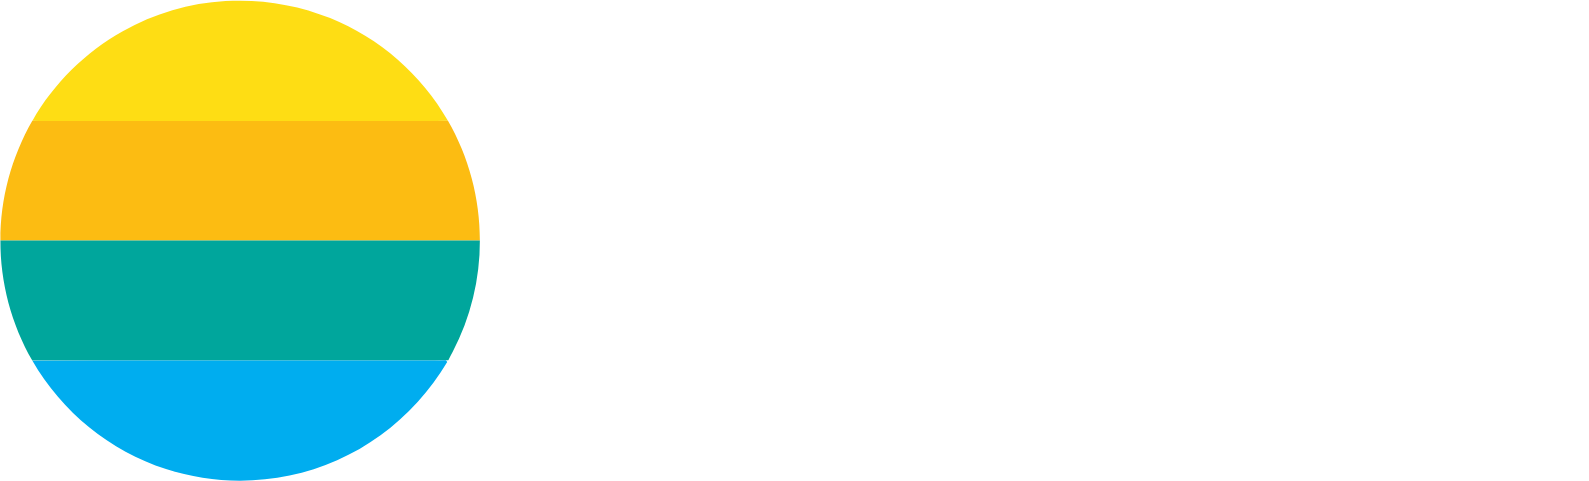 Sonoma Pharmaceuticals logo large for dark backgrounds (transparent PNG)